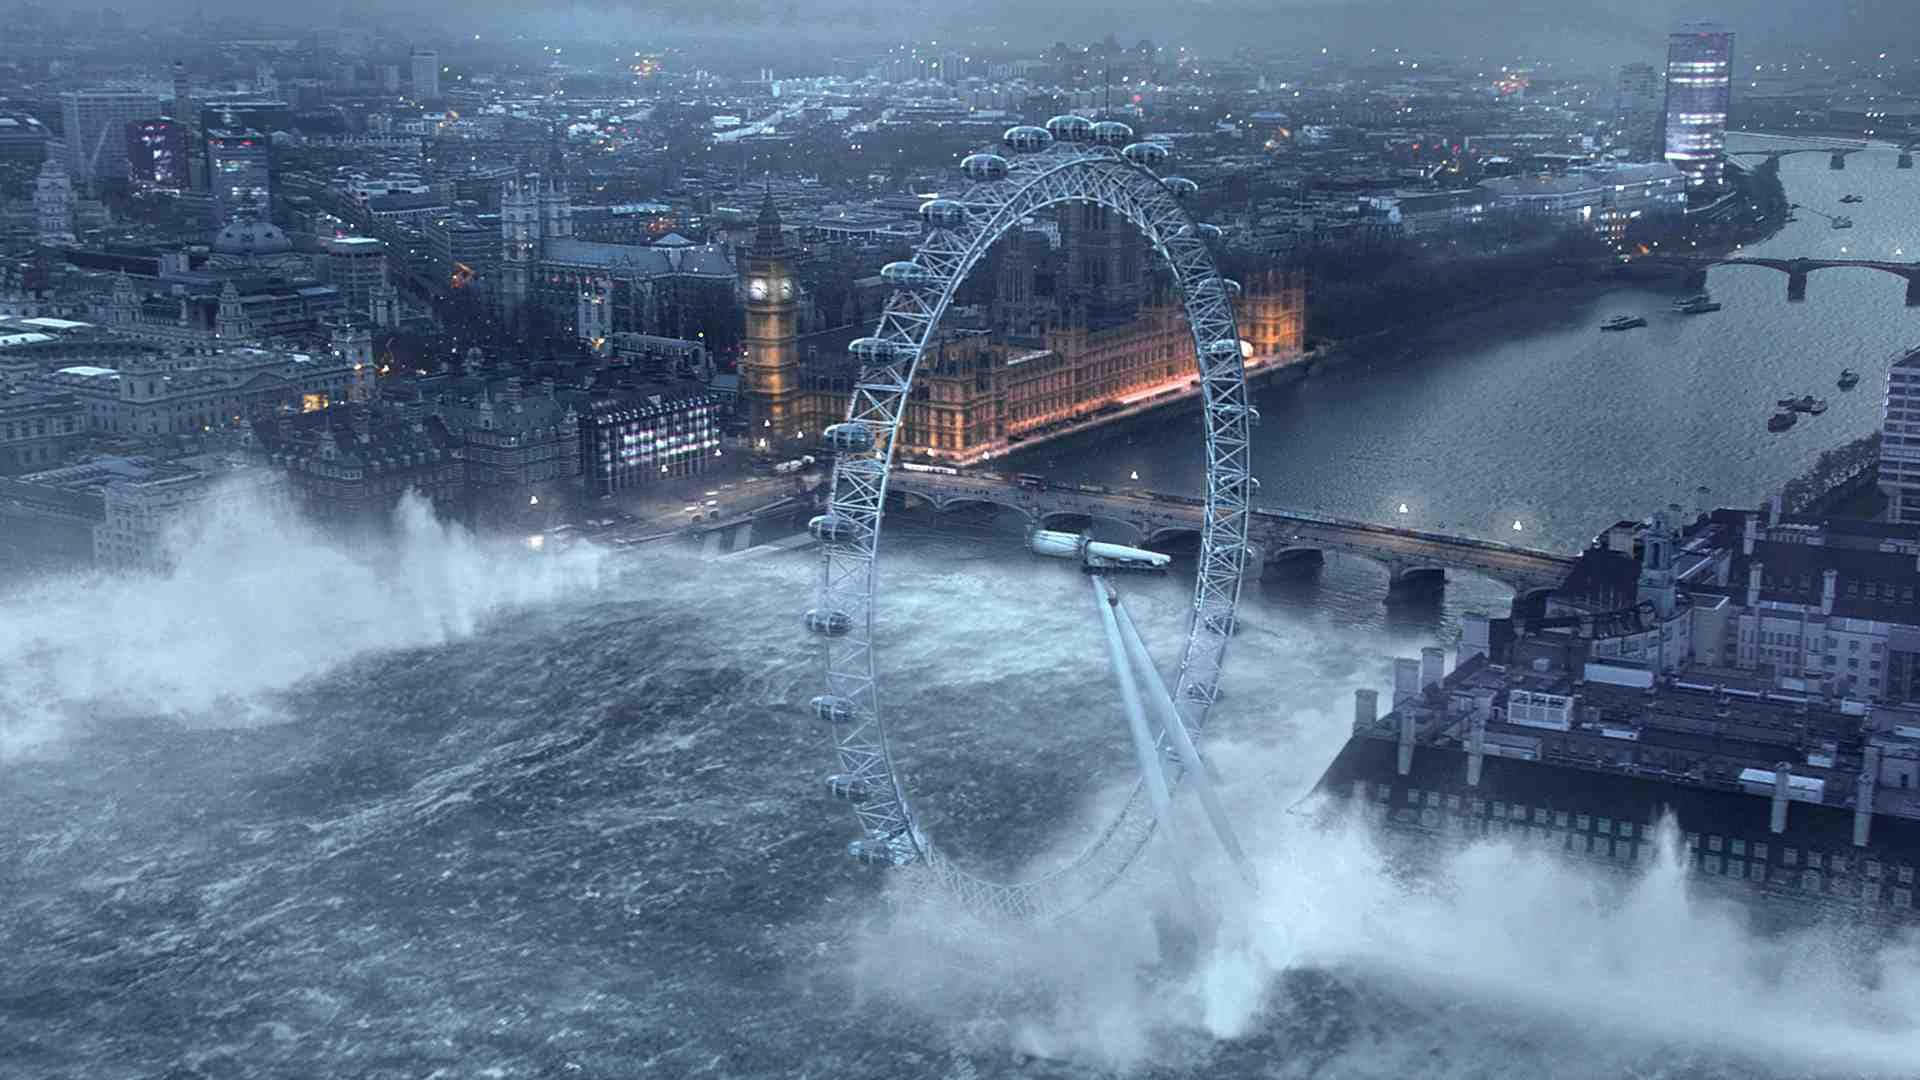 Flood 2007 British Movie London Eye Ferris Wheel Picture